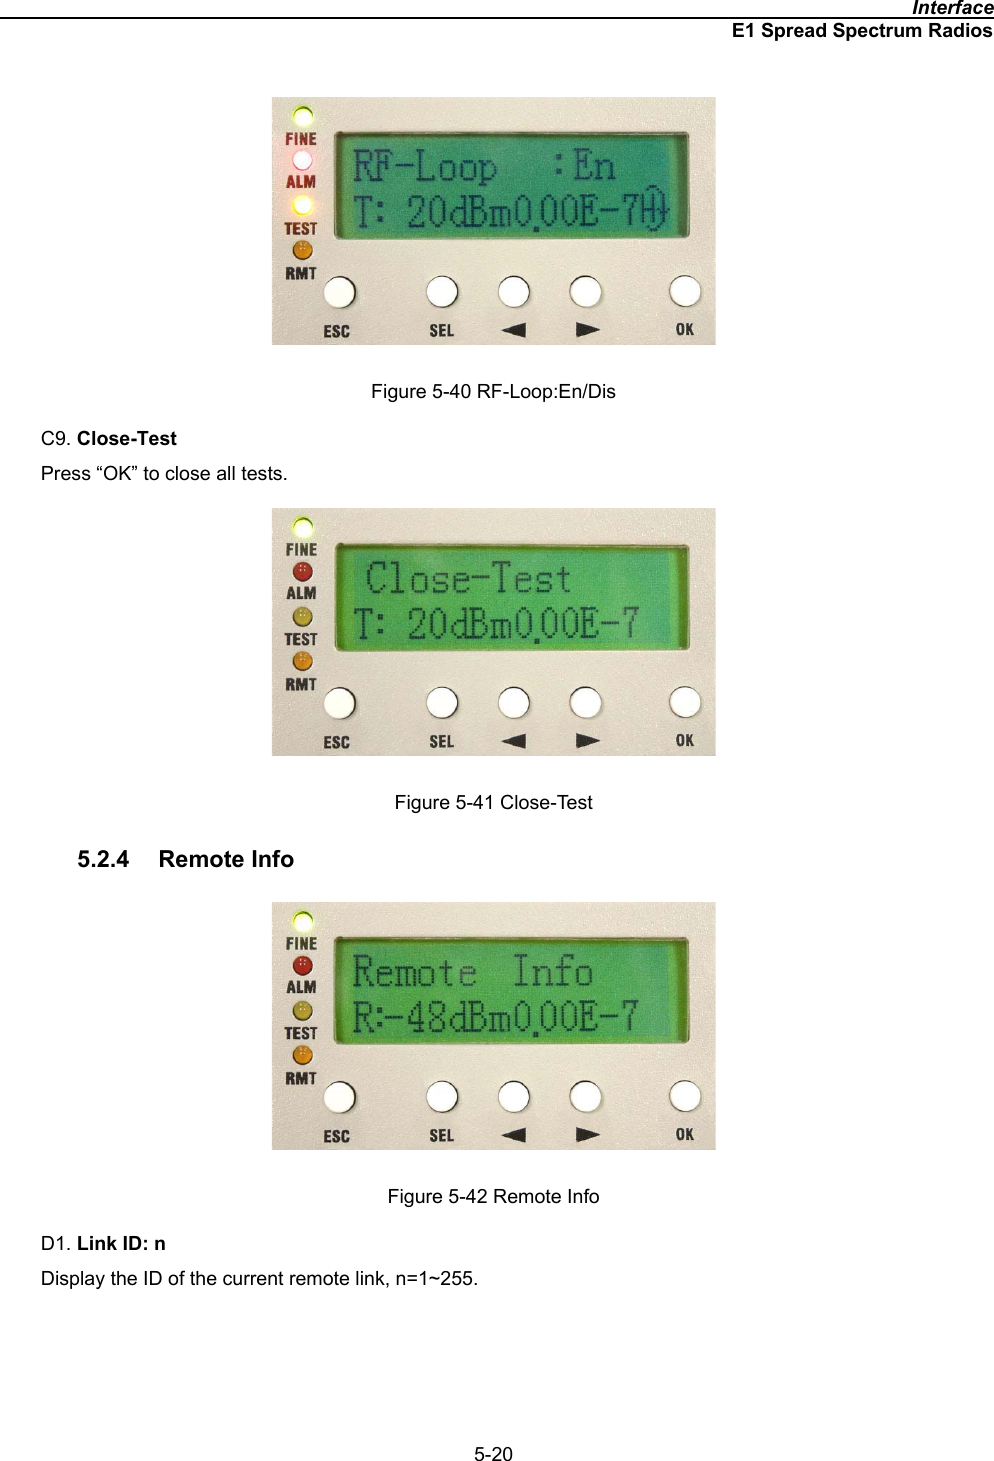                                                                                              InterfaceE1 Spread Spectrum Radios5-20Figure 5-40 RF-Loop:En/Dis C9. Close-TestPress “OK” to close all tests. Figure 5-41 Close-Test 5.2.4 Remote Info Figure 5-42 Remote Info D1. Link ID: nDisplay the ID of the current remote link, n=1~255.   